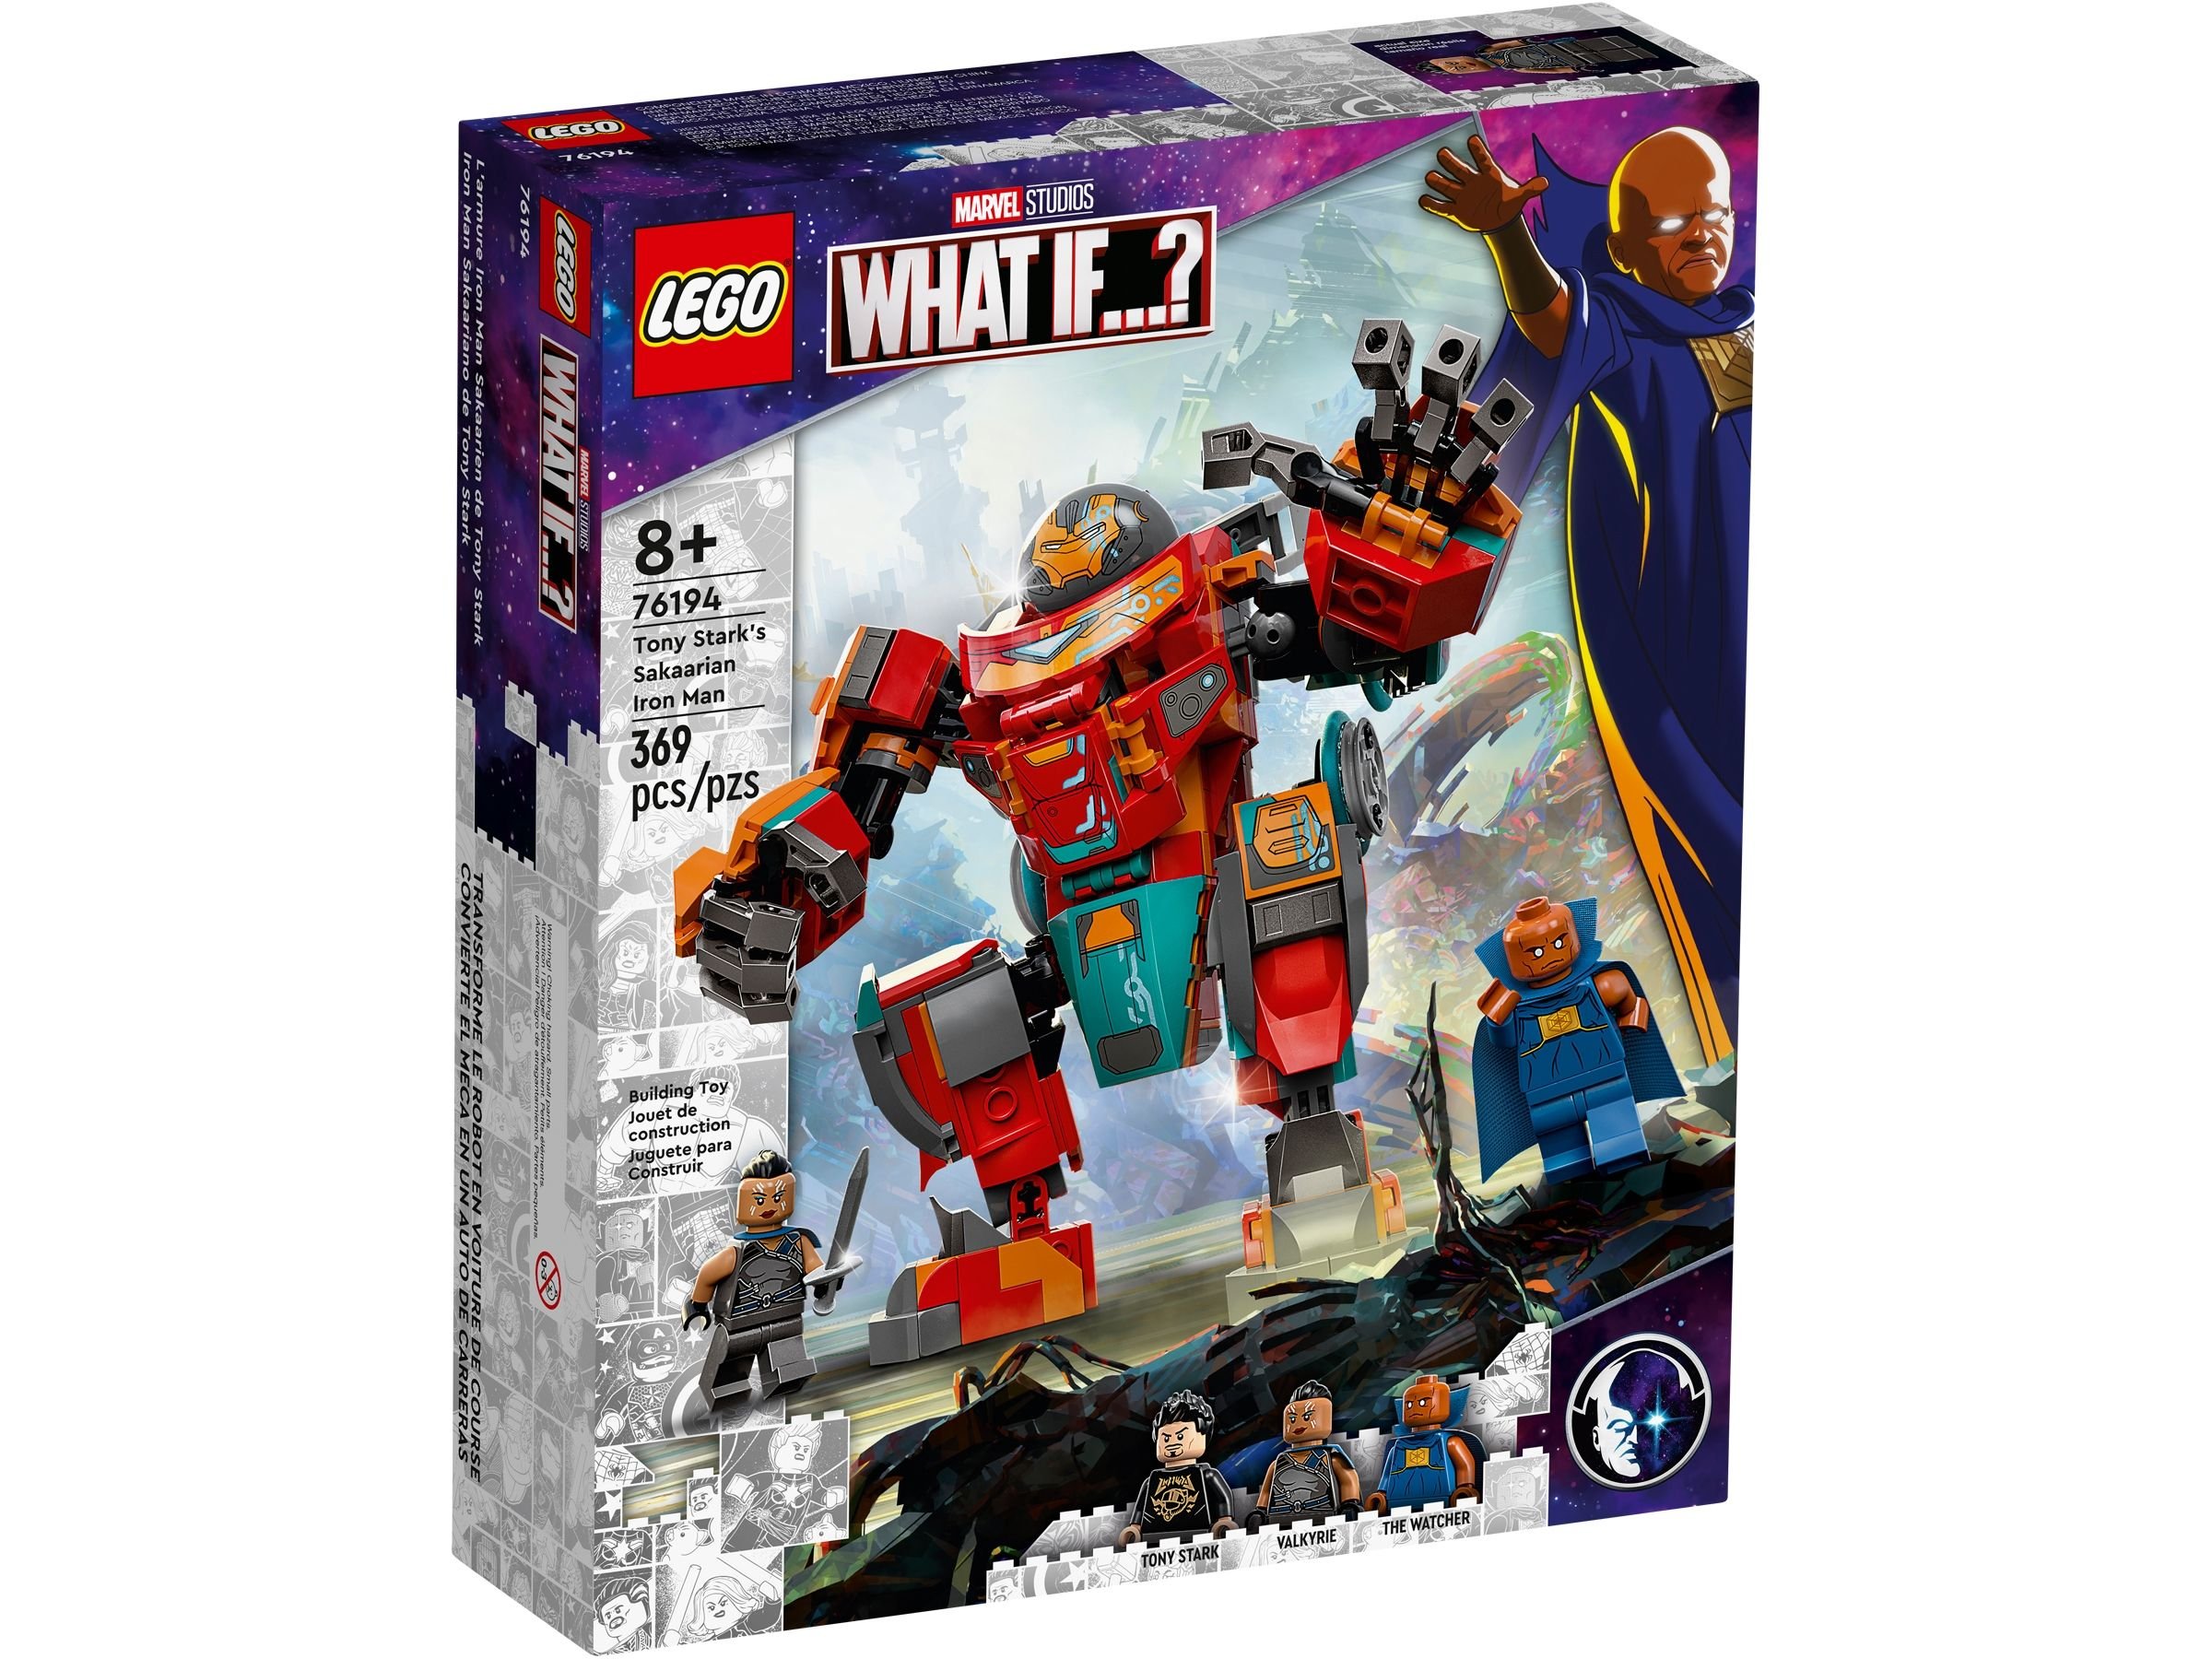 LEGO Super Heroes 76194 Tony Starks sakaarianischer Iron Man LEGO_76194_alt1.jpg